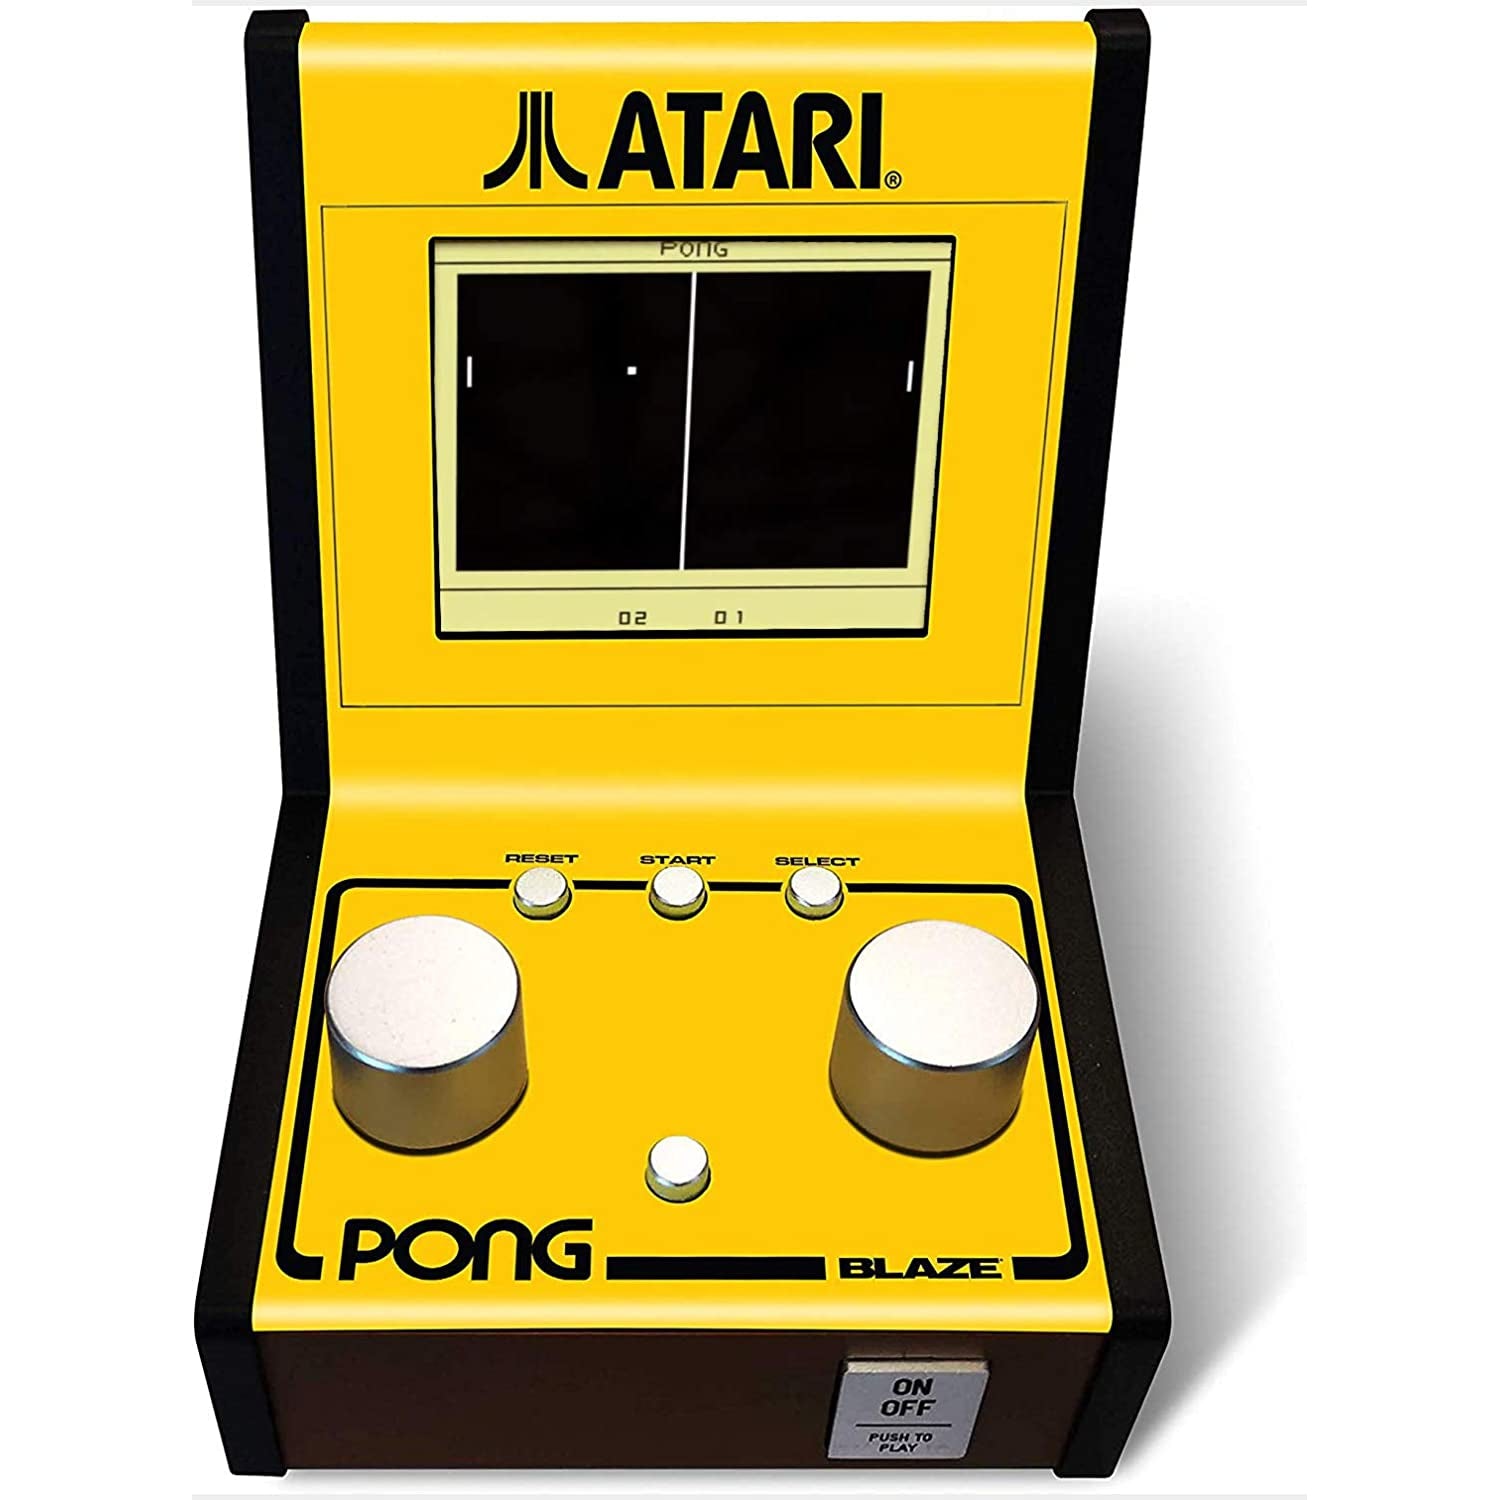 Atari Pong Mini Arcade with Full Colour 2.8" Display (with 12 retro games)